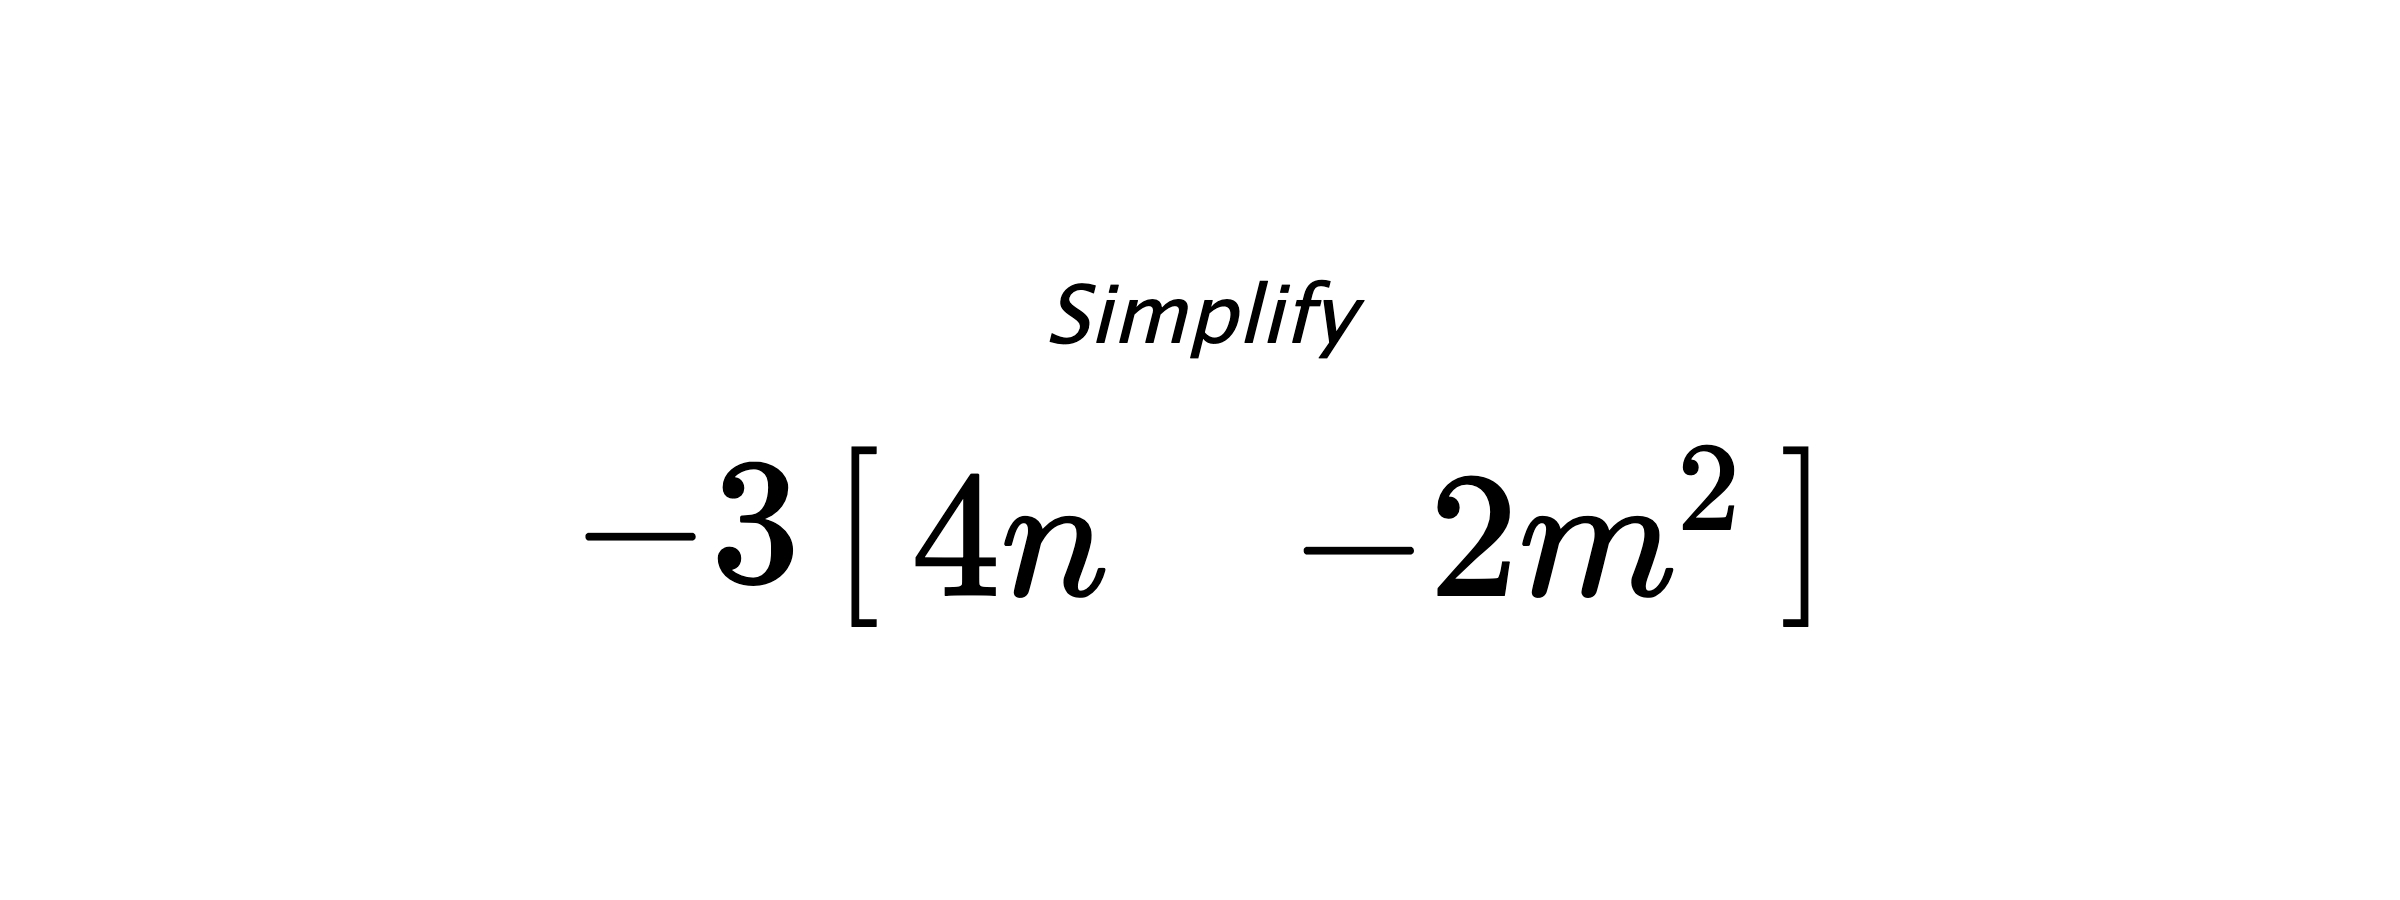 Simplify $ -3 \begin{bmatrix} 4n & -2m^2 \end{bmatrix} $